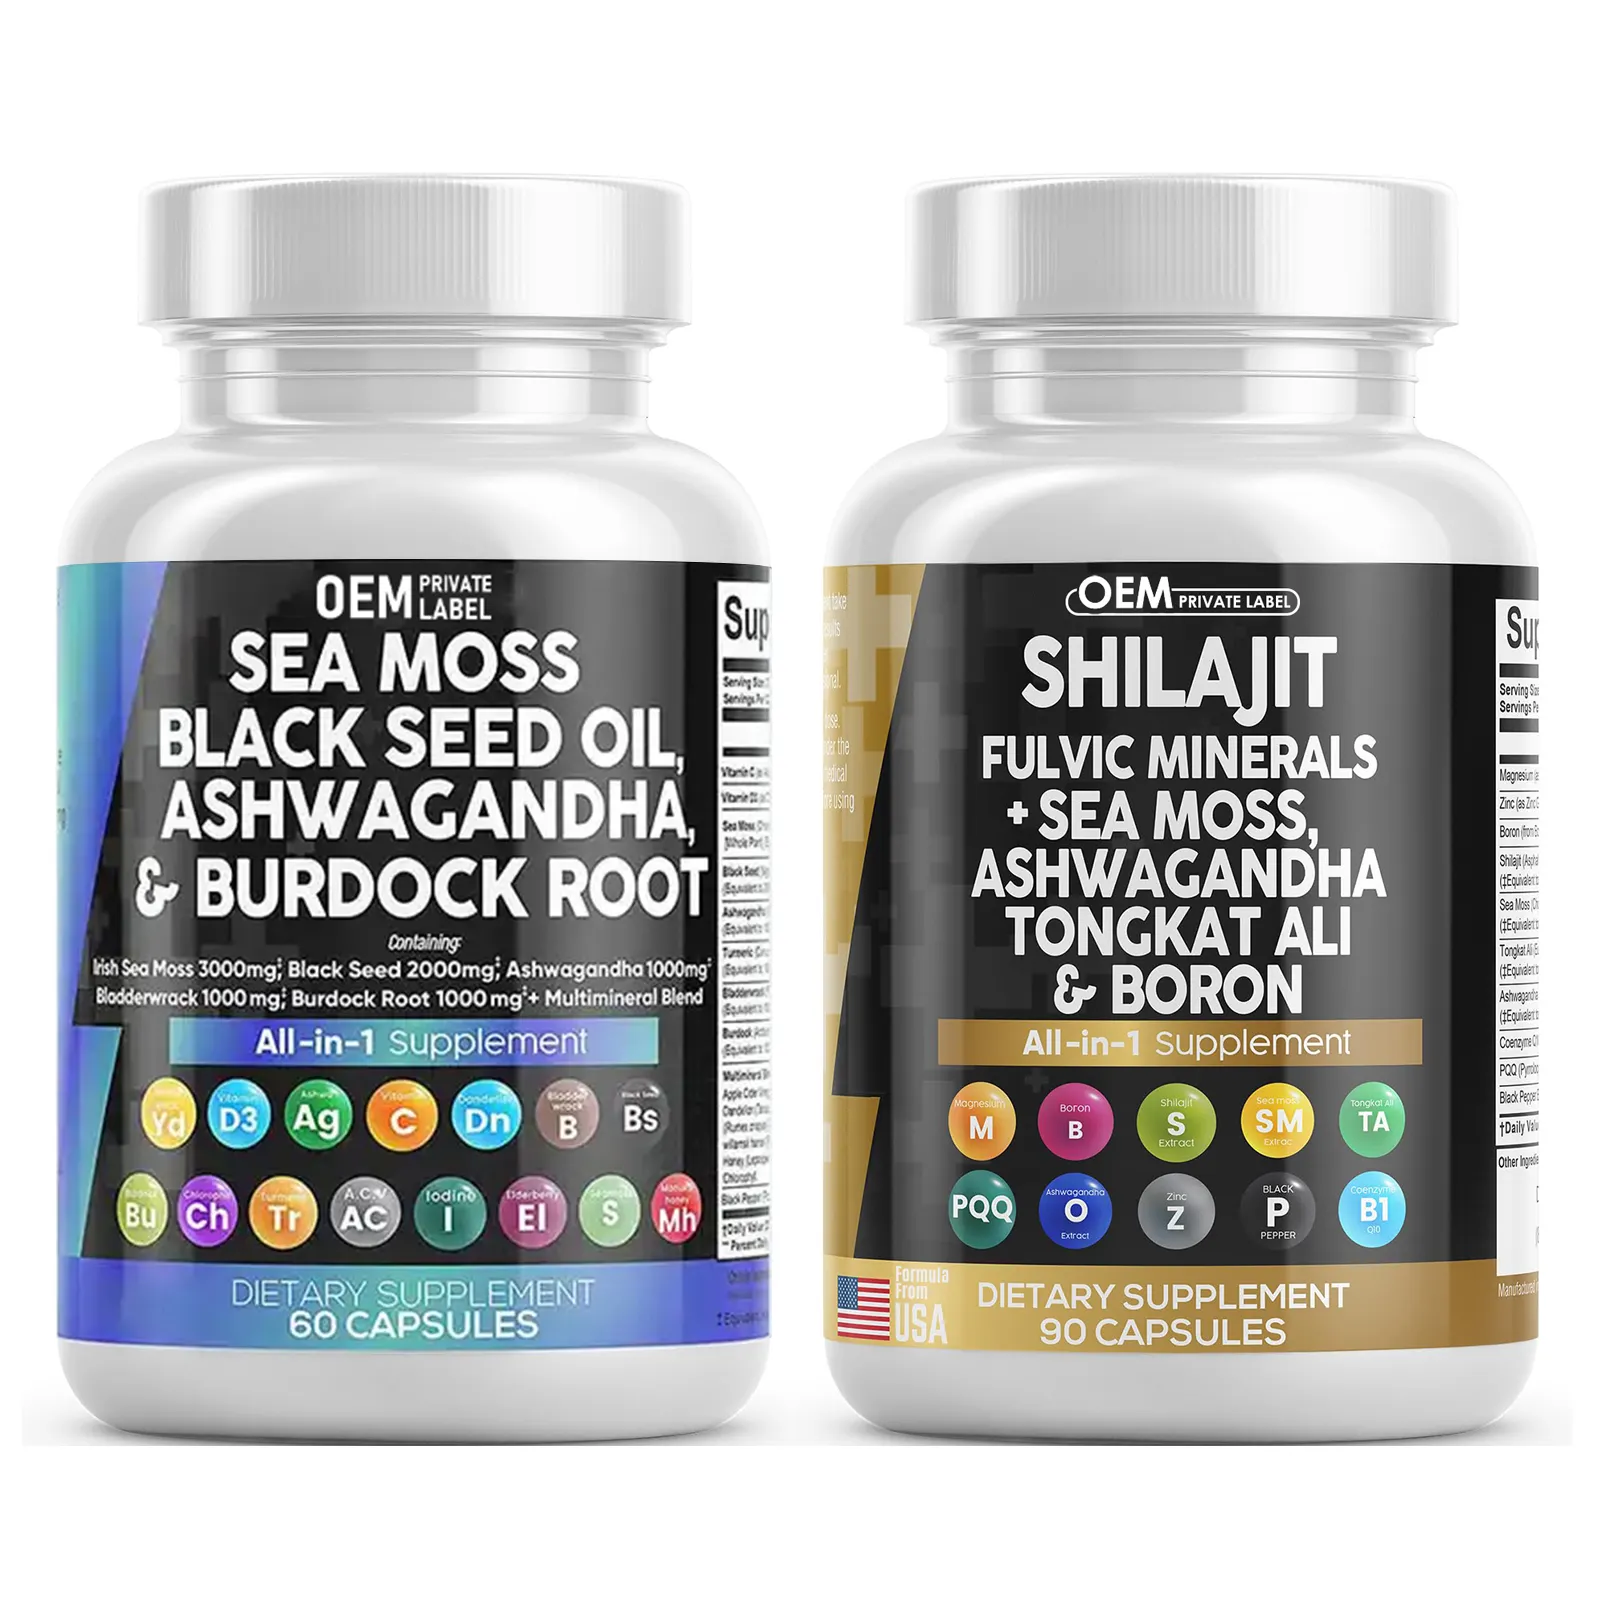 OEM Shilajit capsule minerali fulvici Moss acido mare miscela naturale Ashwagandha shilajit capsula complesso all-in-1